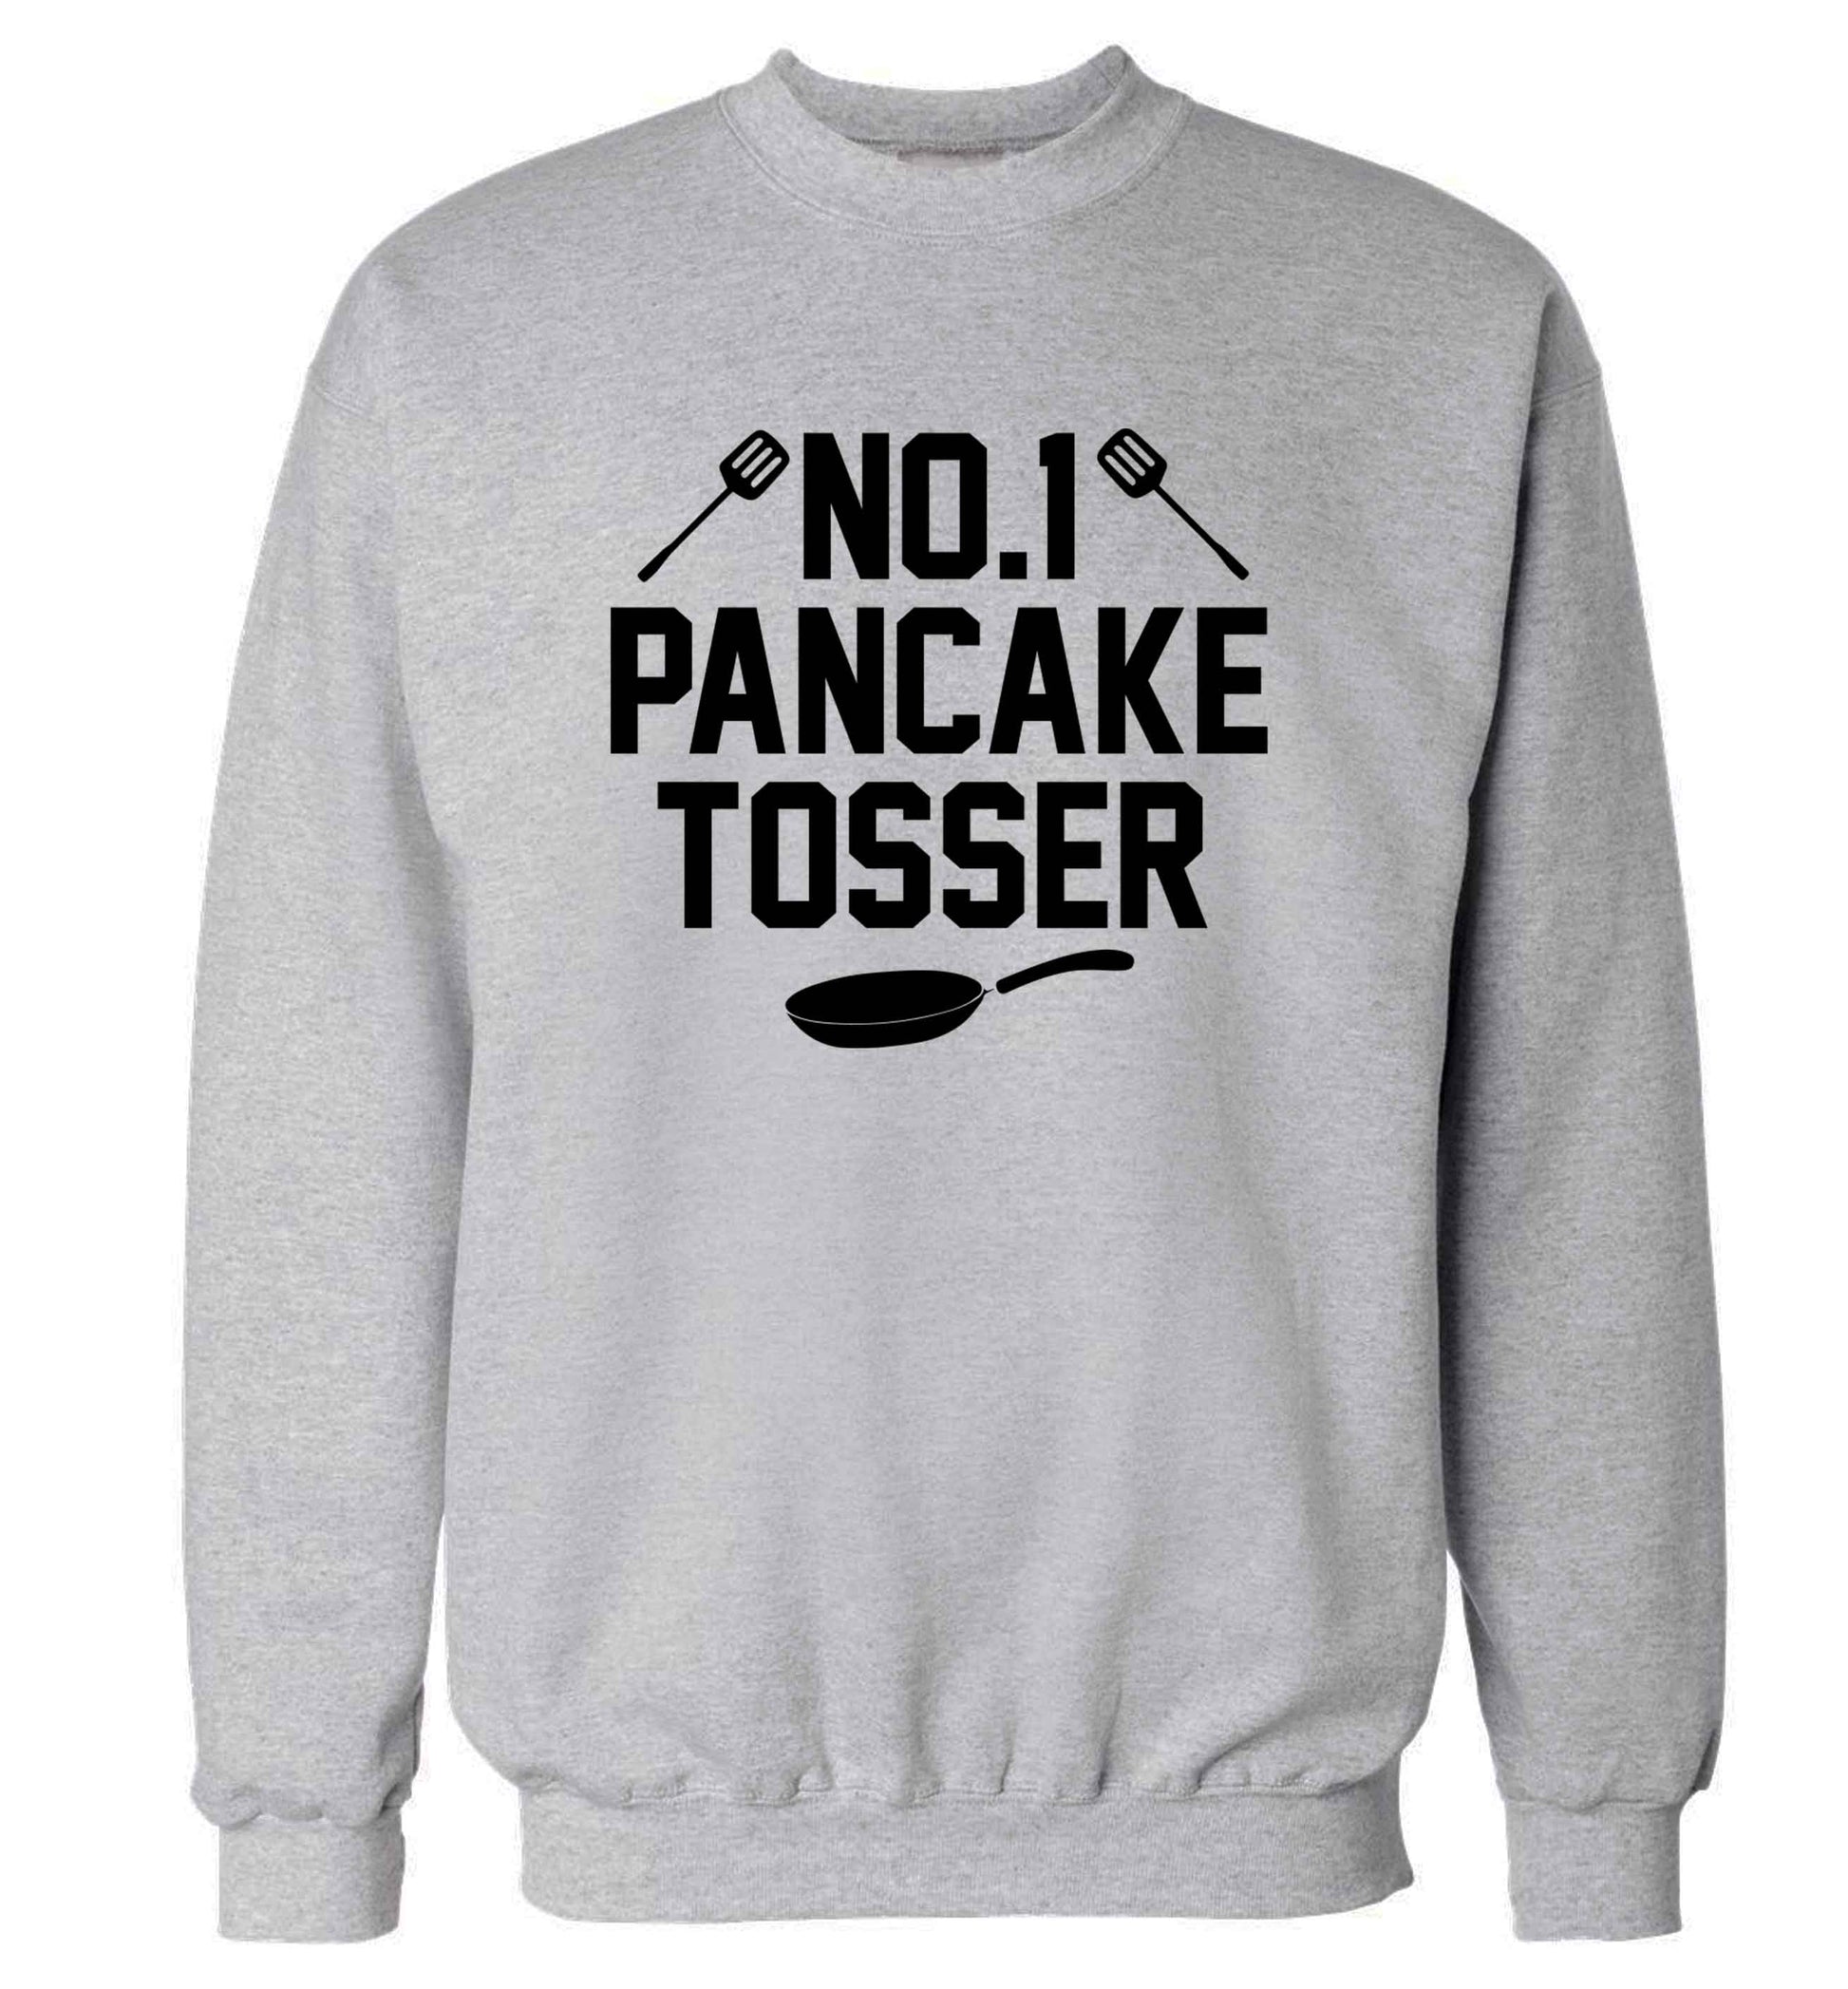 No.1 Pancake tosser adult's unisex grey sweater 2XL